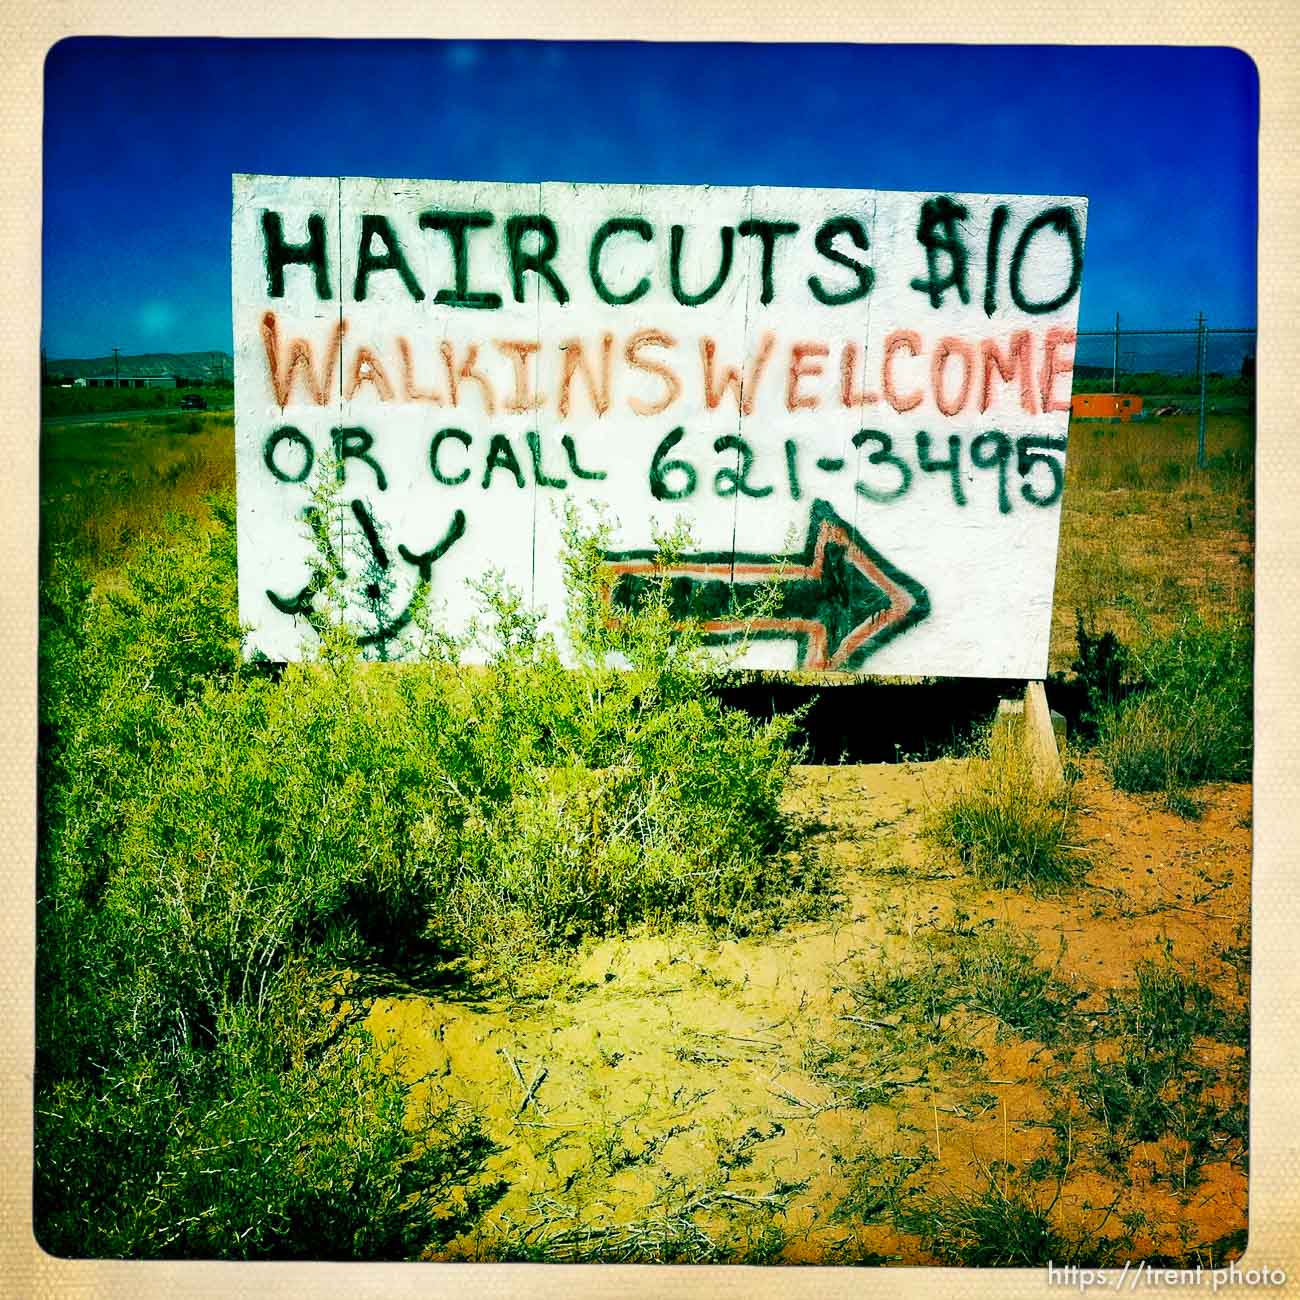 Haircuts $10 Walkins Welcome